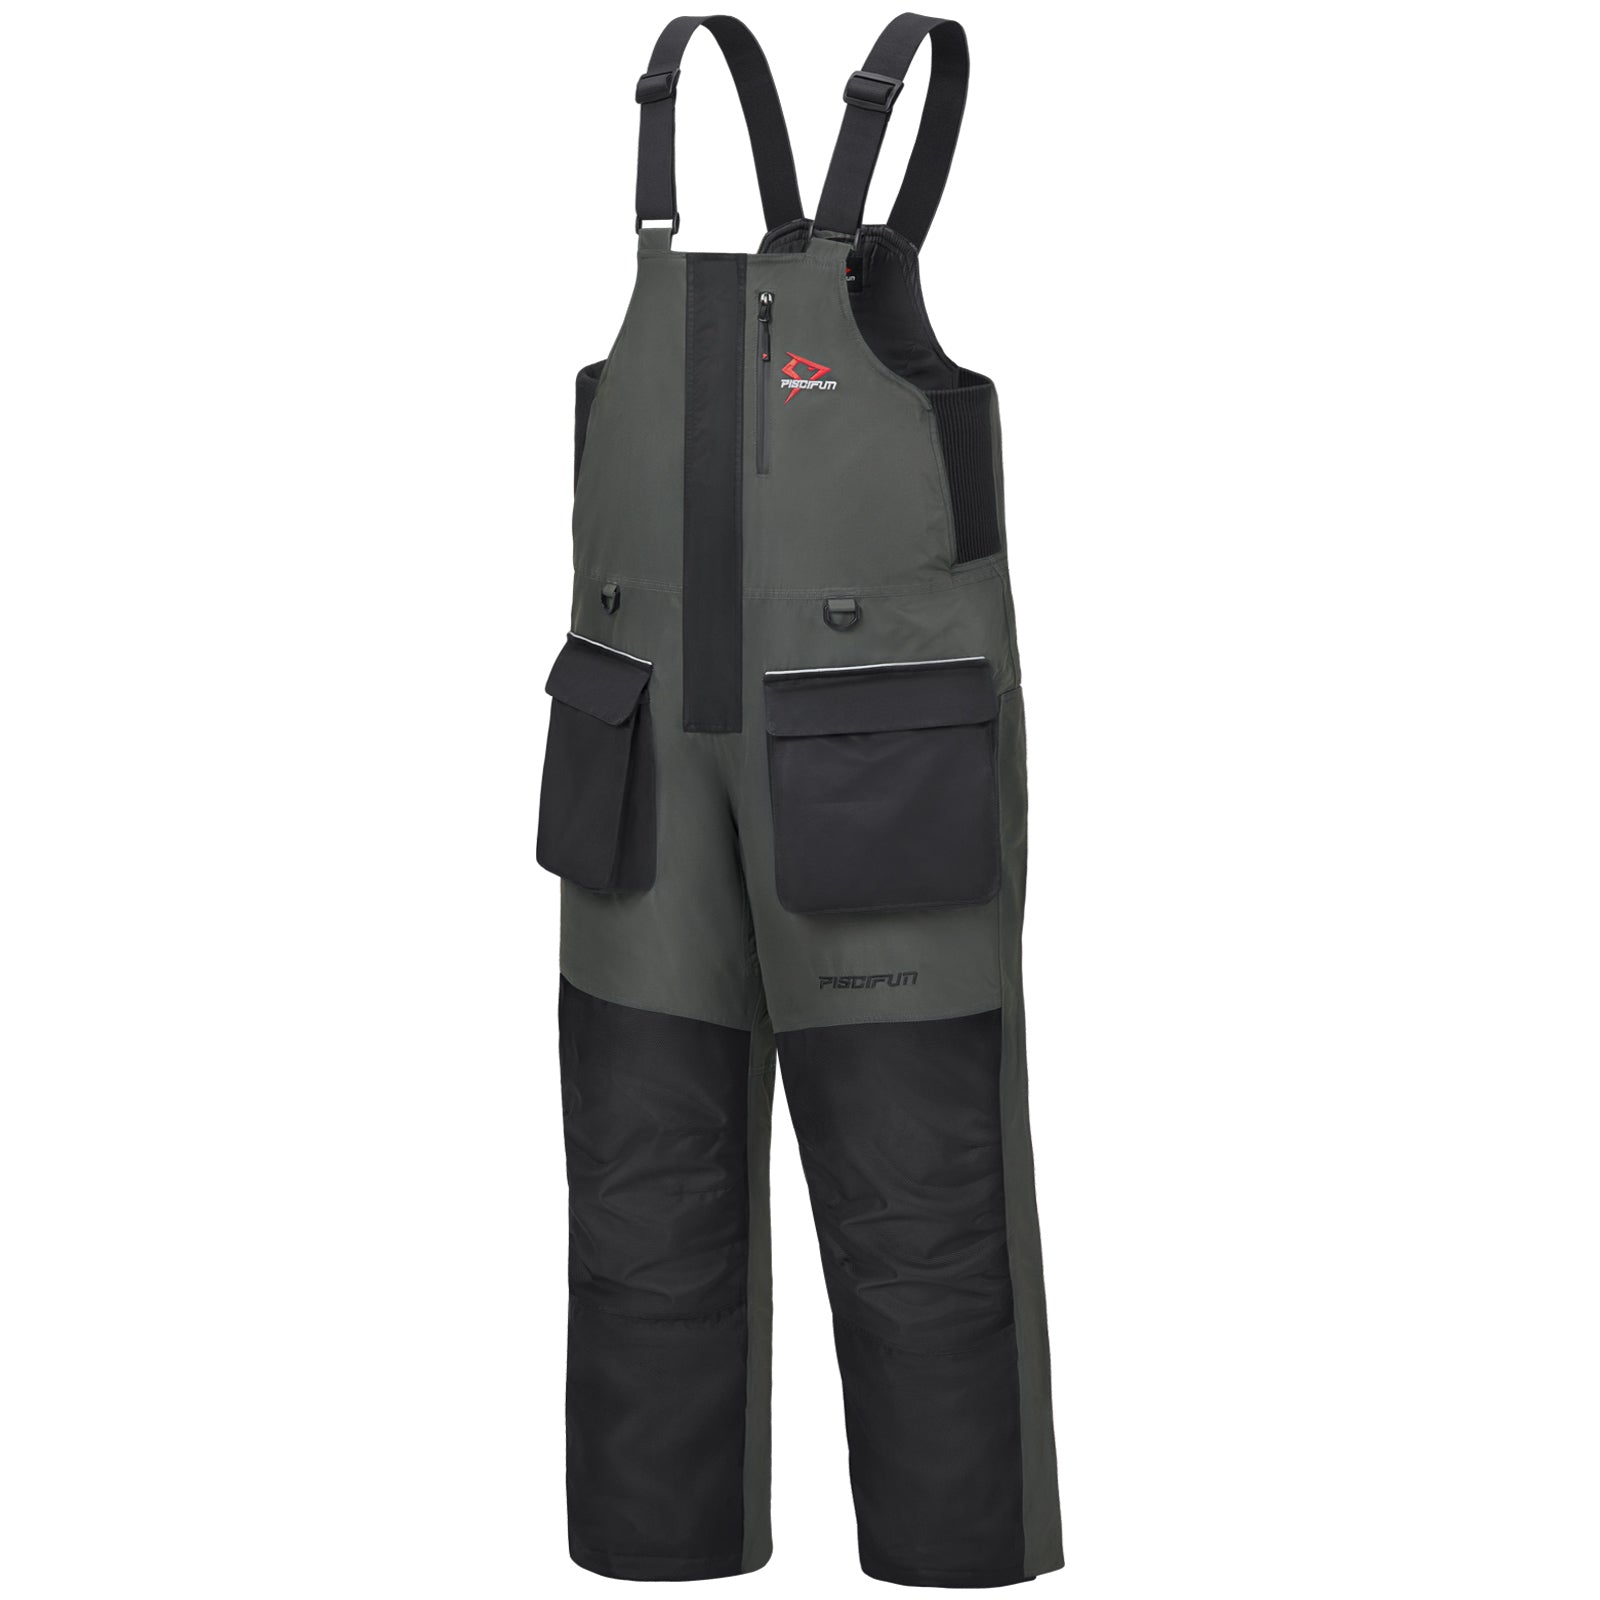 Piscifun Ice Fishing Suit,3 in 1 Jacket,Waterproof Fishing Bib